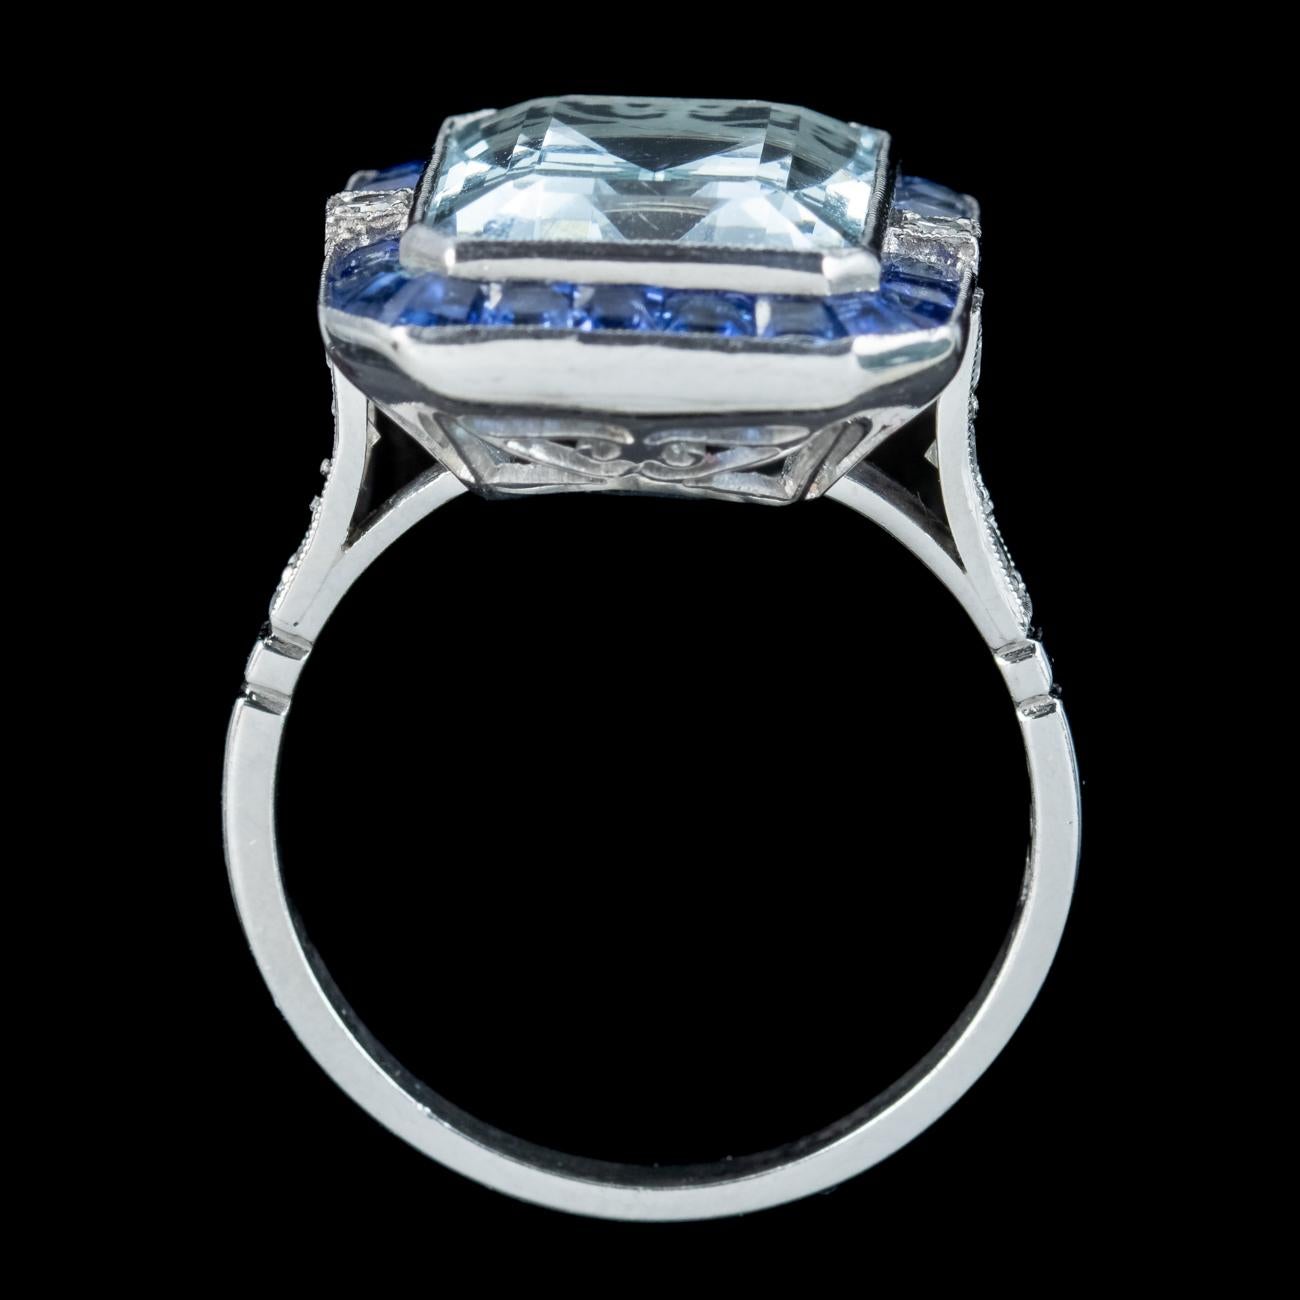 Art Deco Style Aquamarine Sapphire Diamond Cocktail Ring 7.29ct Aqua For Sale 2